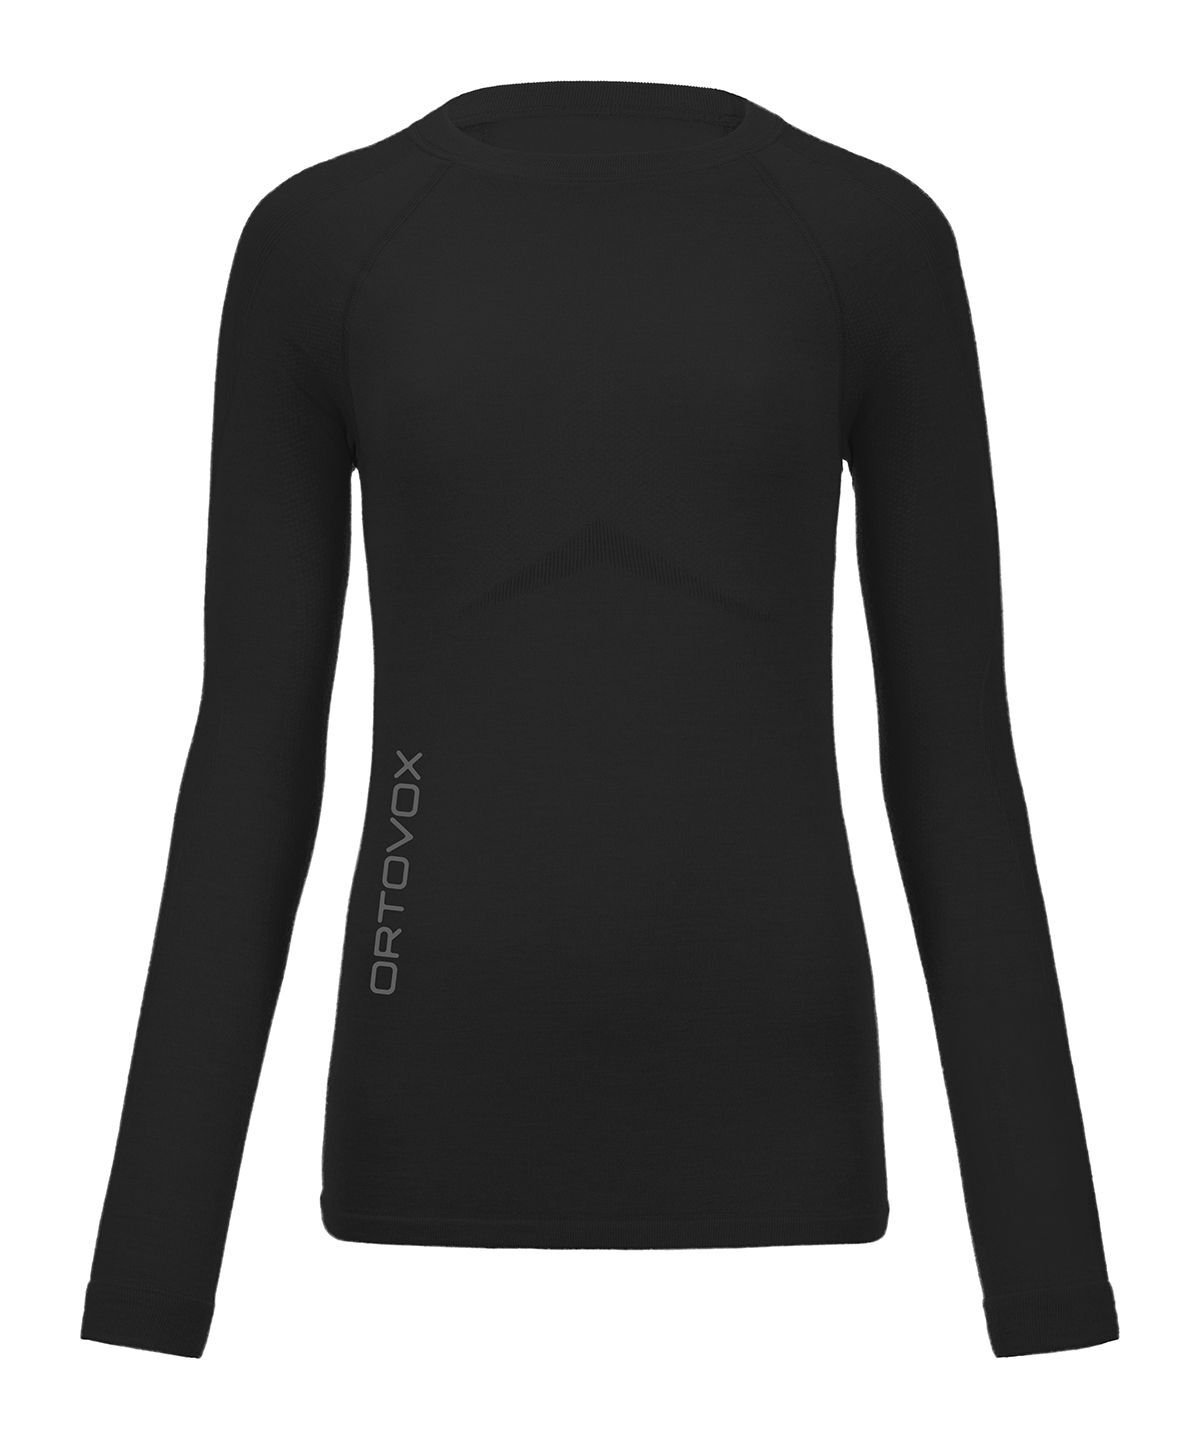 Ortovox 230 Competition Long Sleeve - Merino base layer - Women's